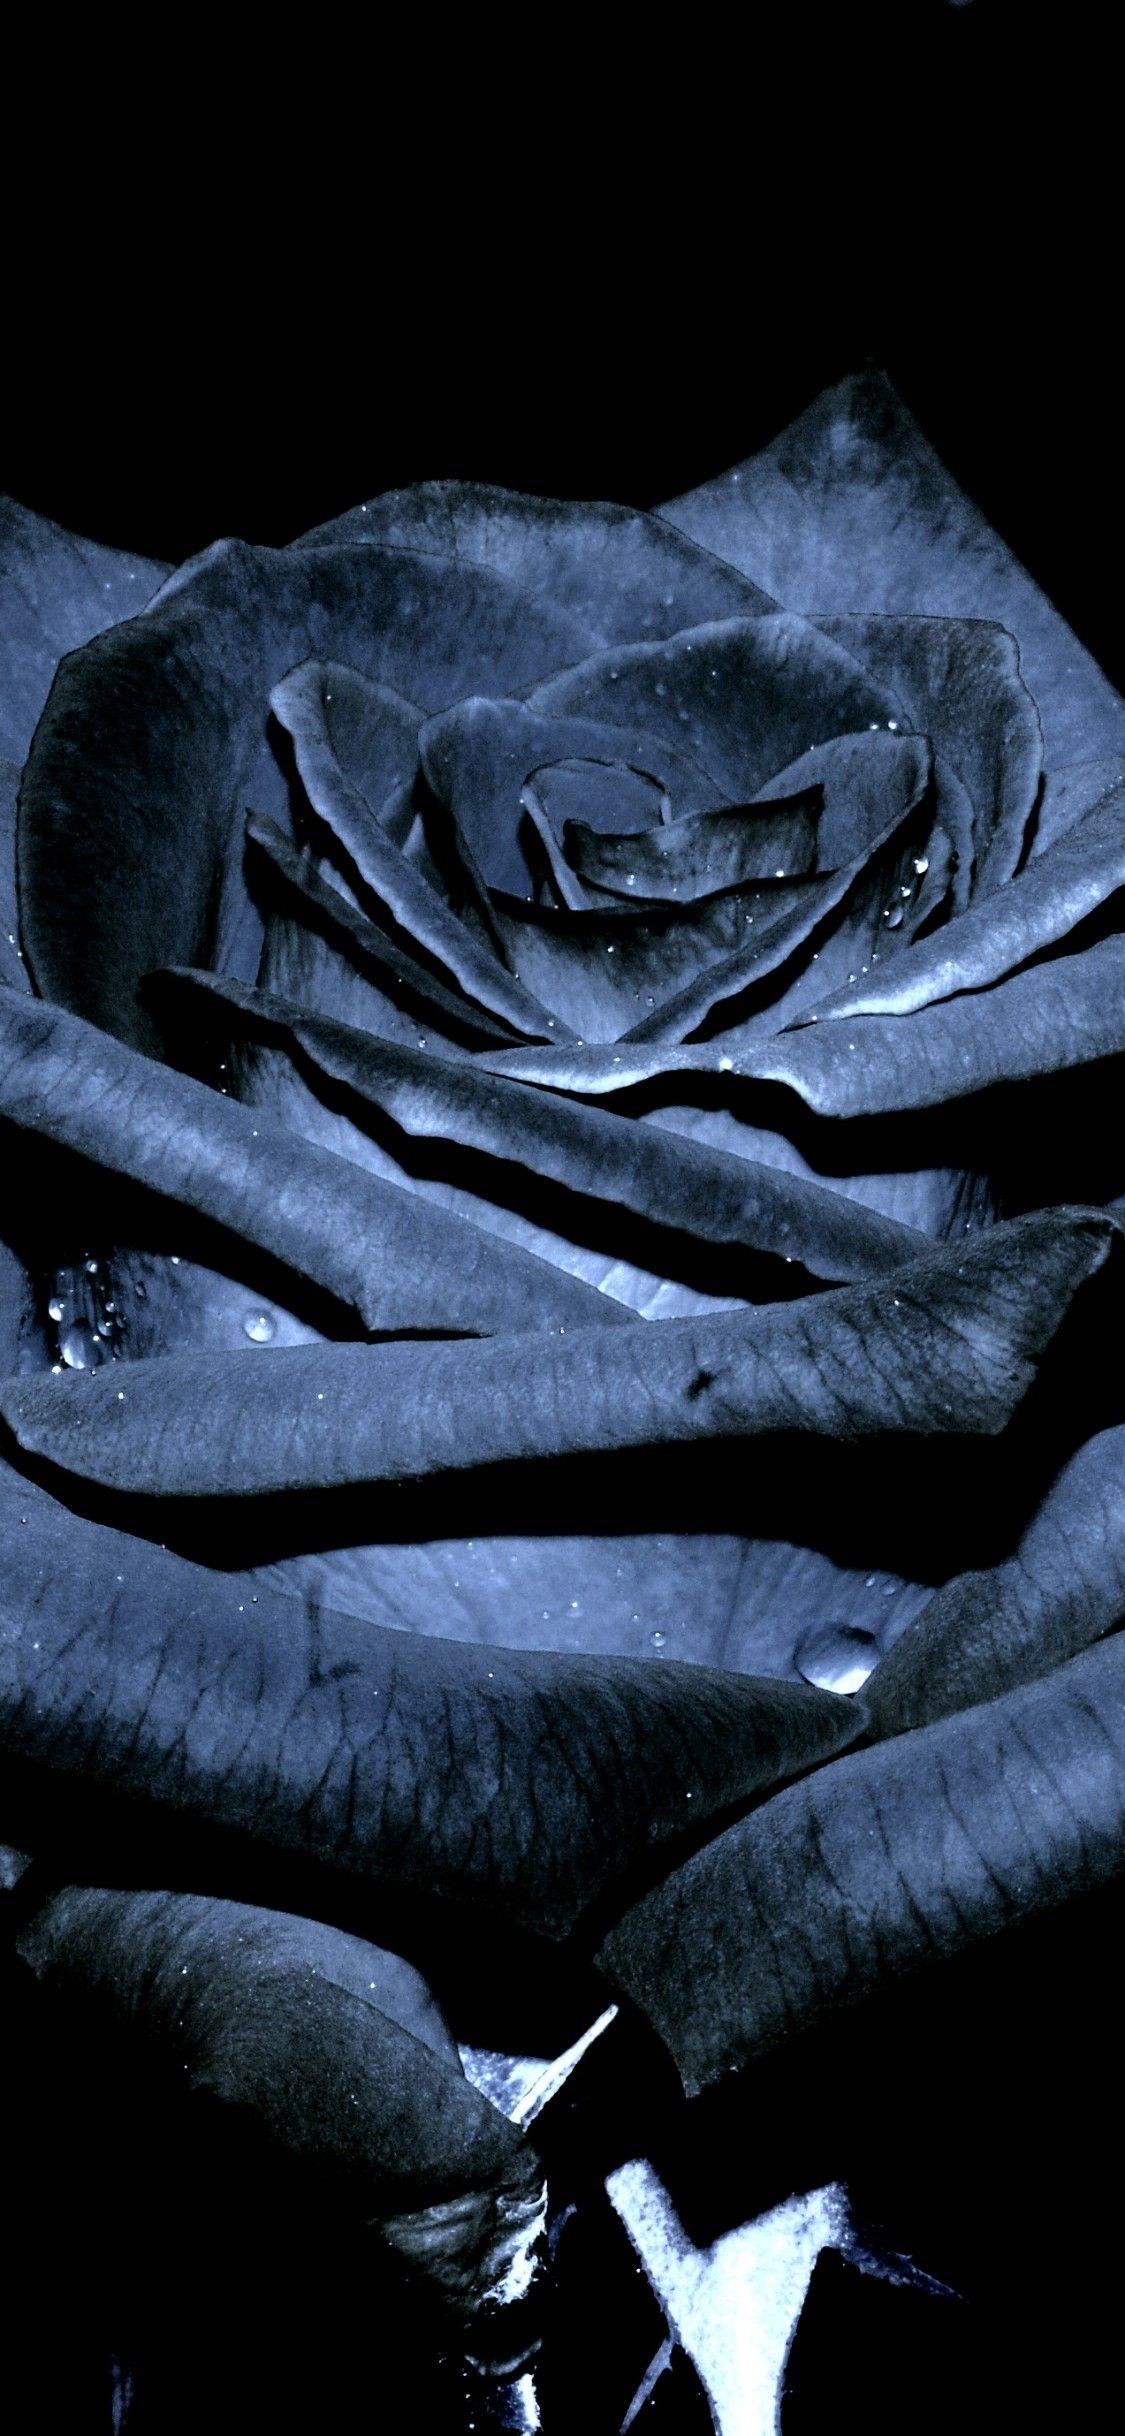 Black Rose 3D Wallpapers - Top Free Black Rose 3D Backgrounds